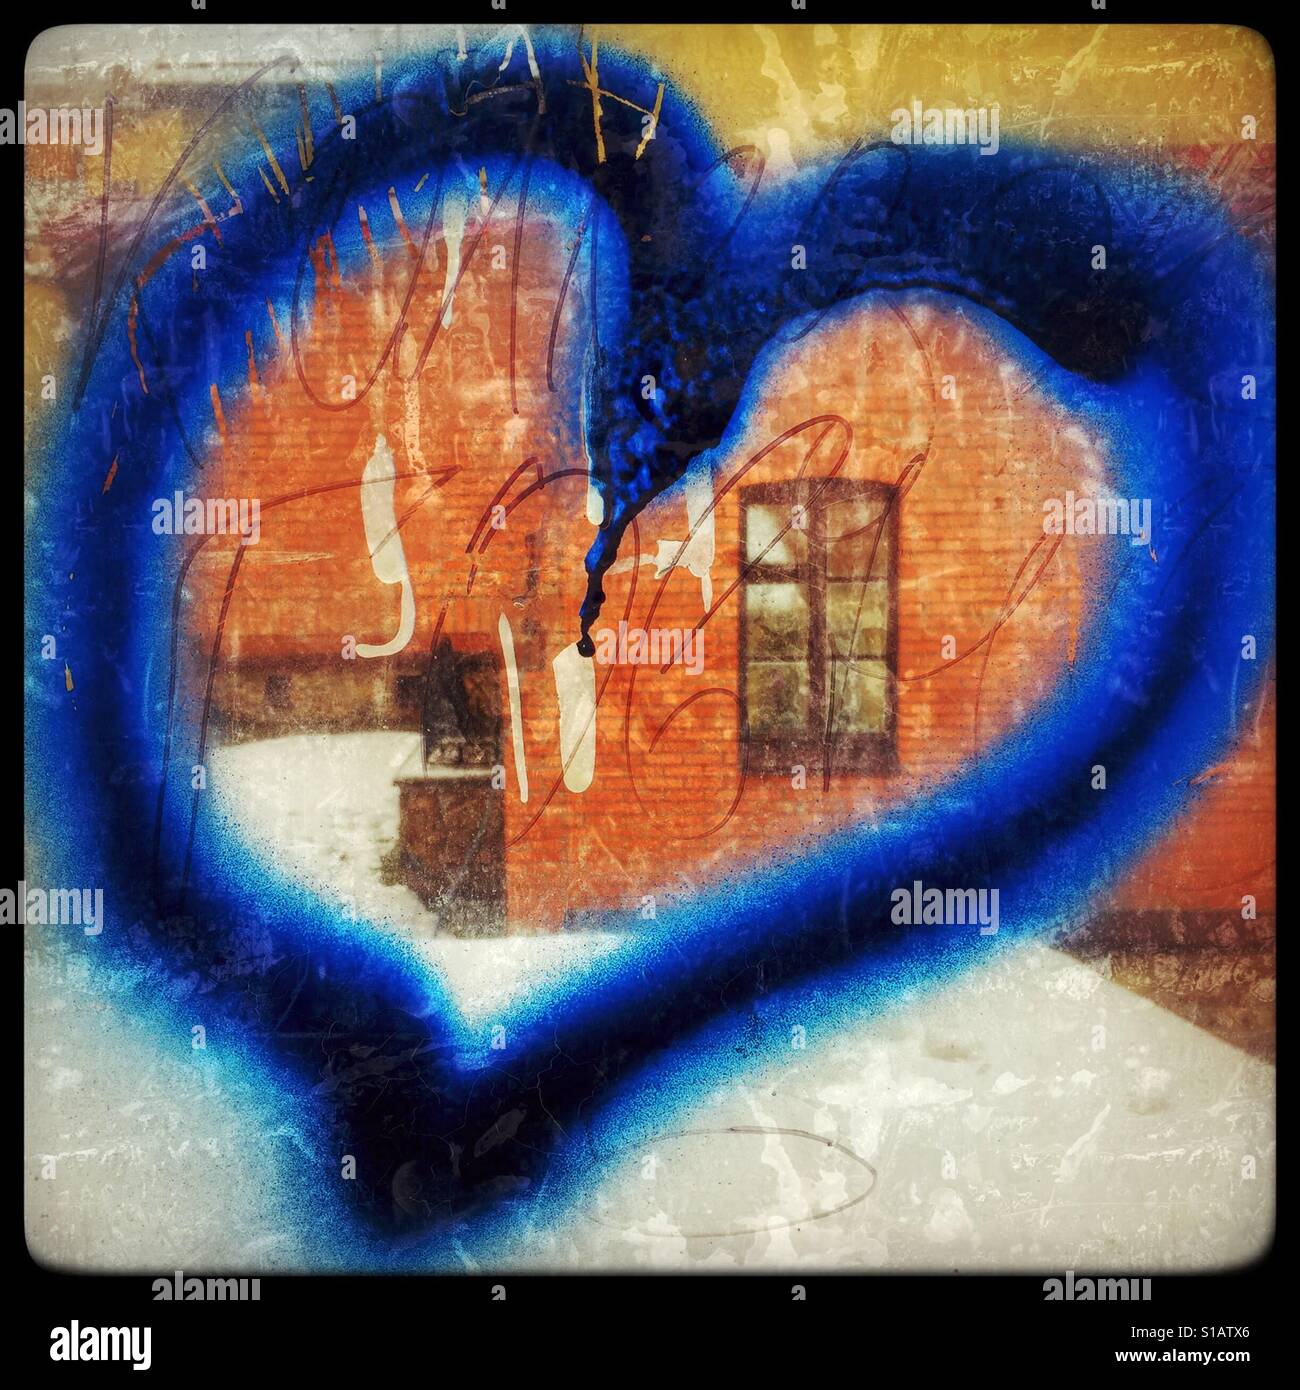 Blue heart graffiti on the window Stock Photo